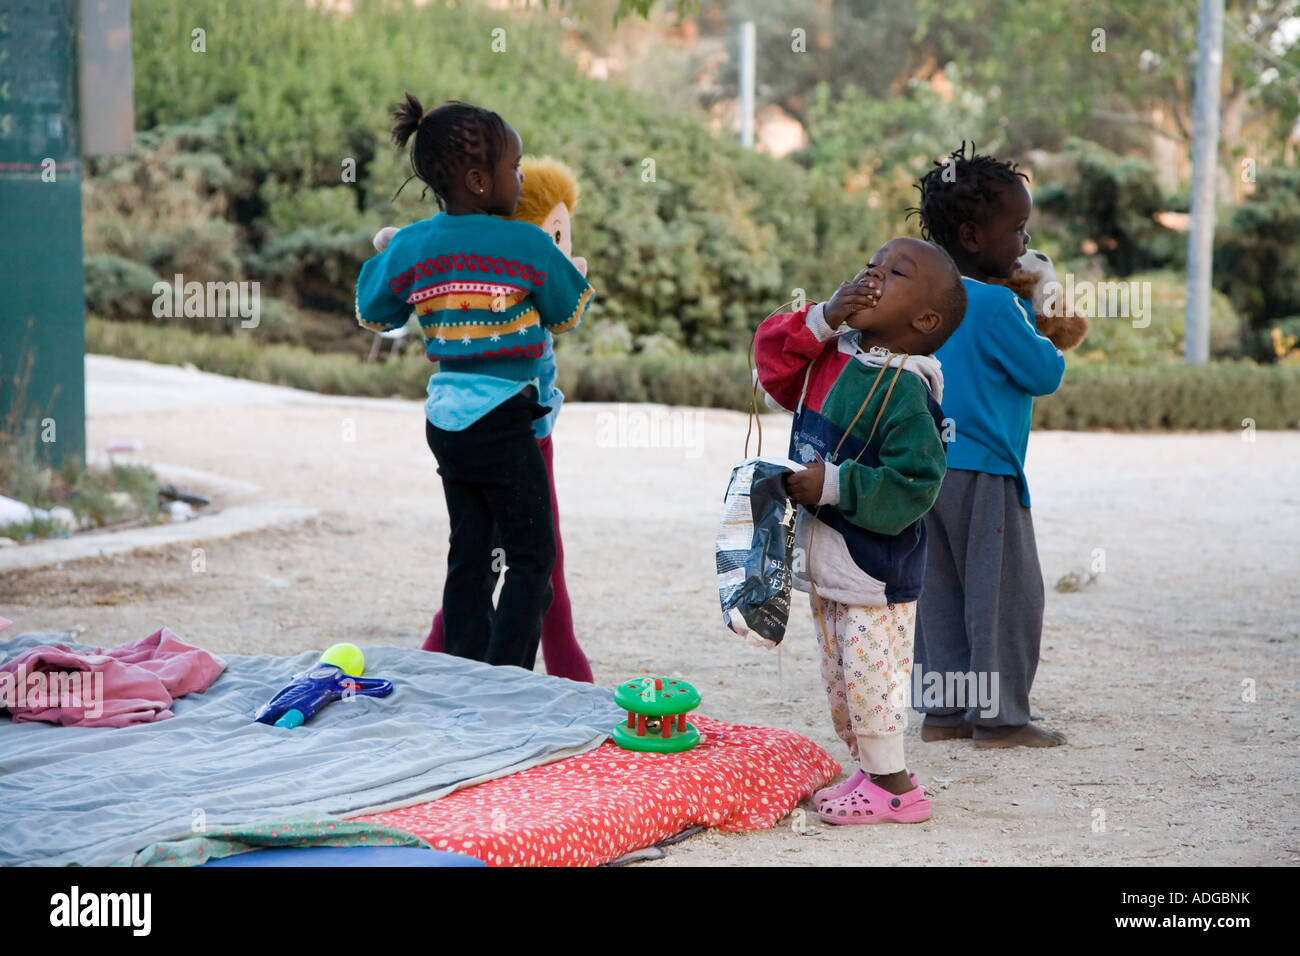 Stock Photo of Darfur Sudan Children Refugees in Jerusalem Israel Stock Photo